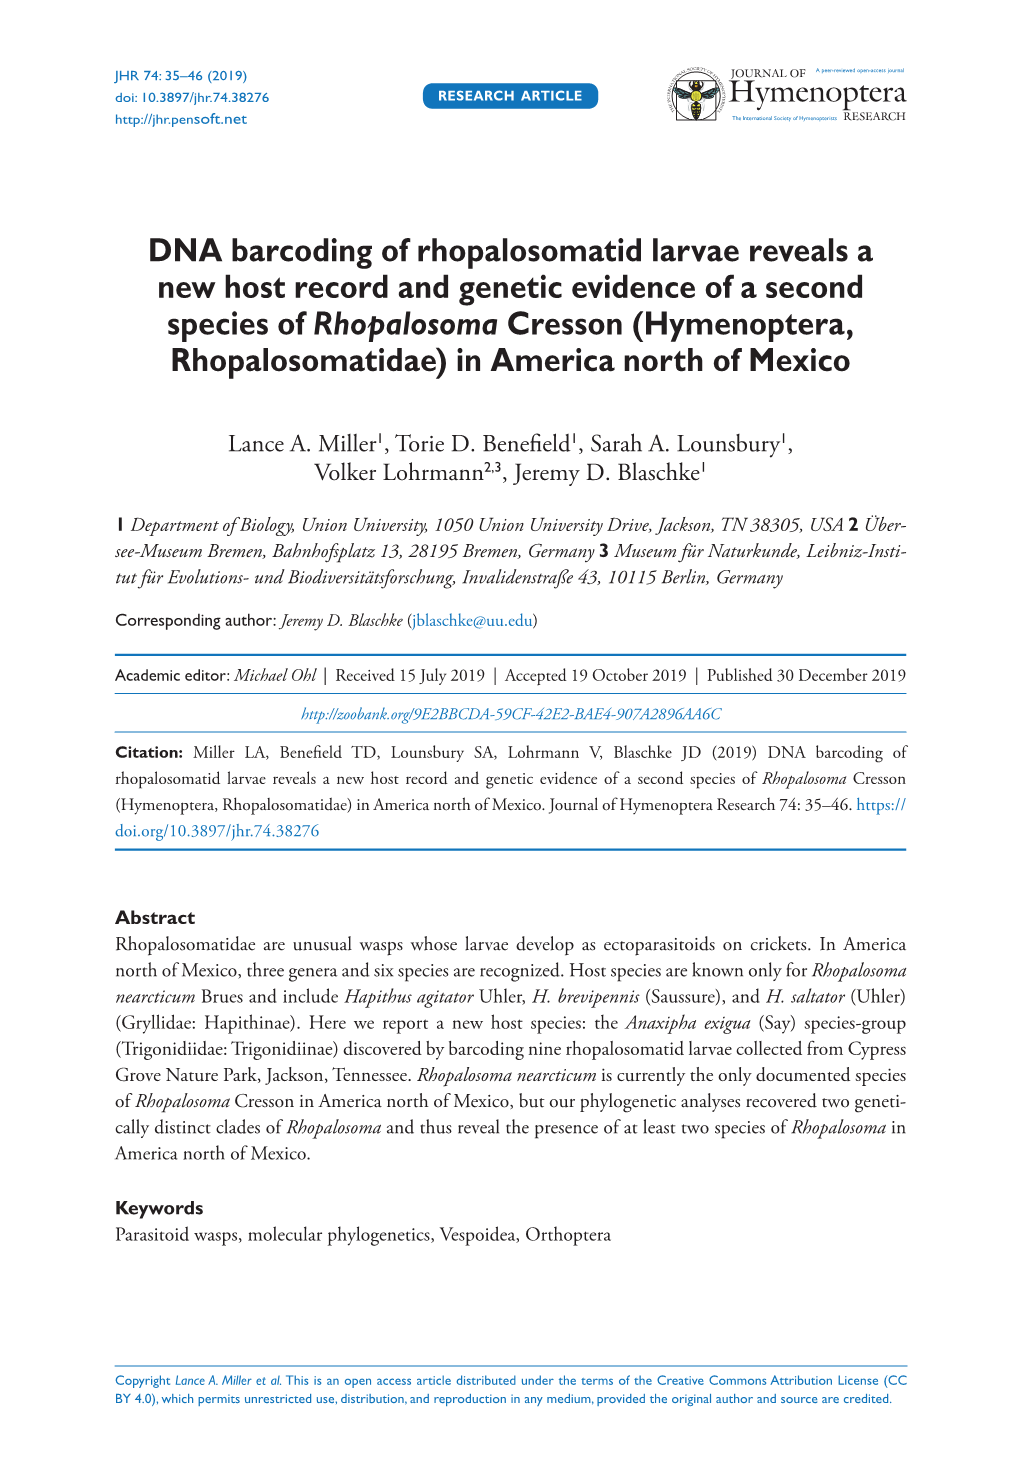 DNA Barcoding of Rhopalosomatid